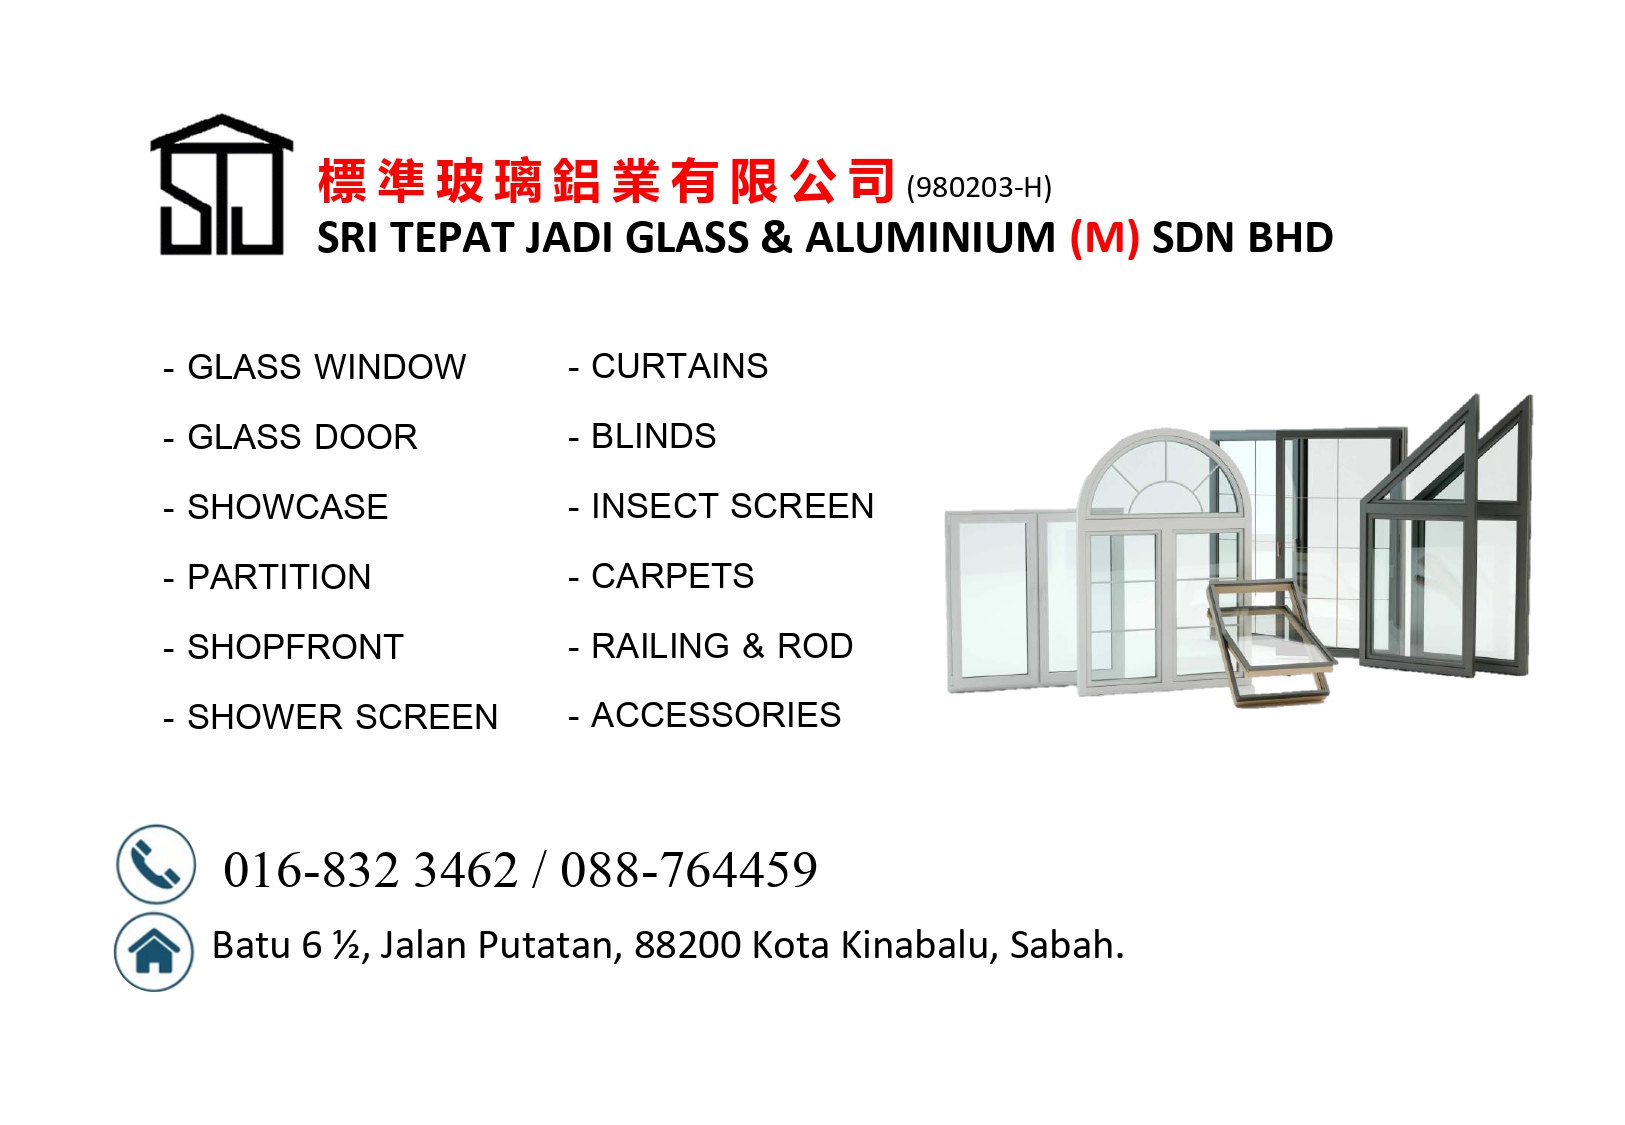 SRI TEPAT JADI GLASS & ALUMINIUM (M) SDN. BHD.